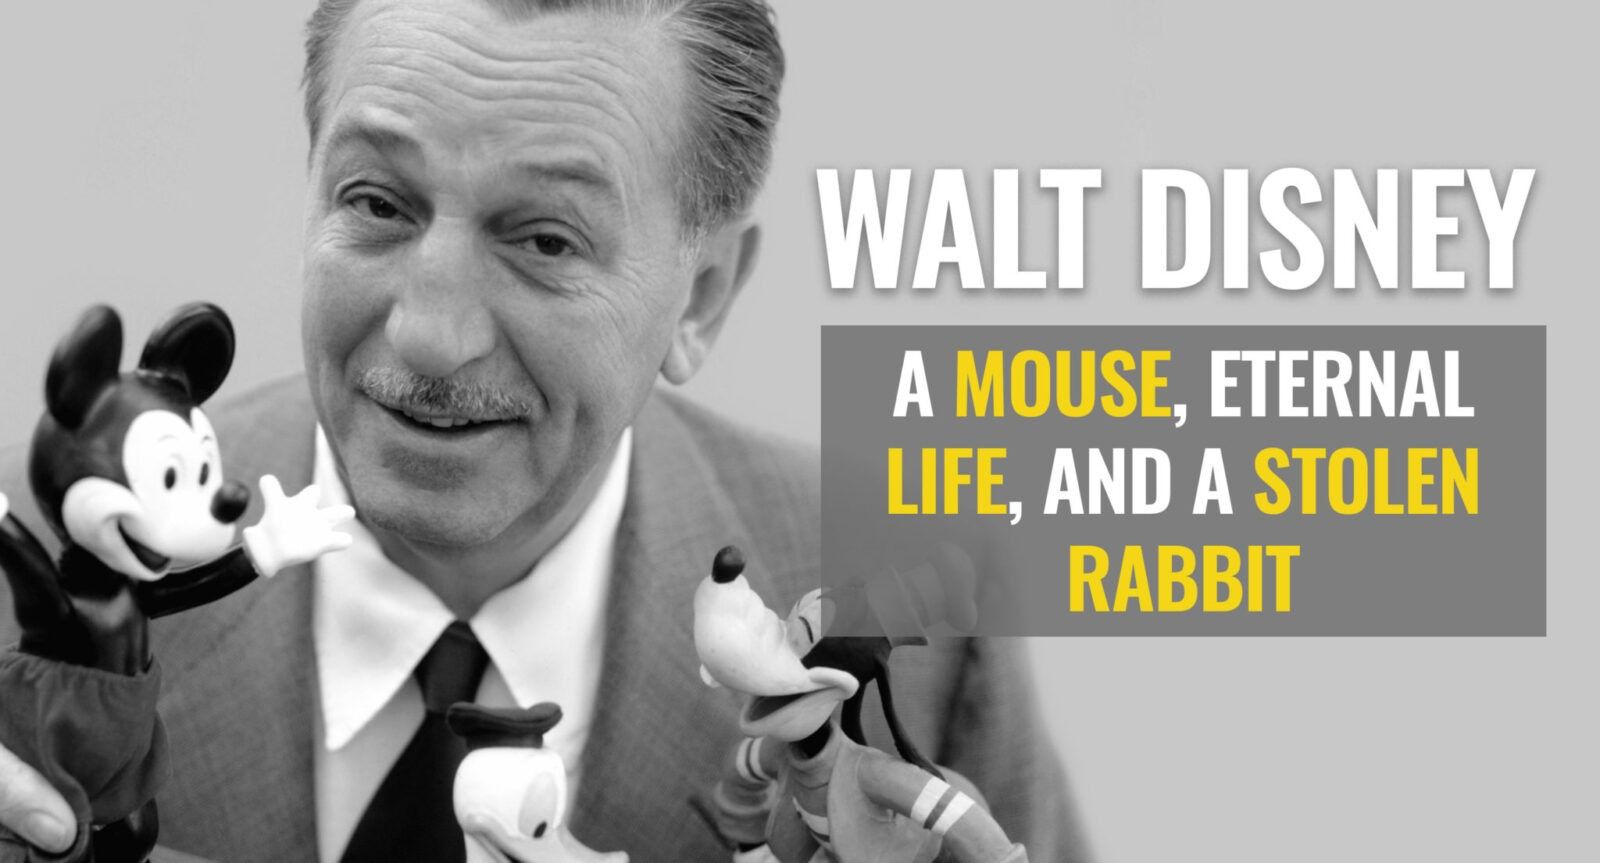 Walt Disney's Life Story: A Mouse, Eternal Life, and a Stolen Rabbit